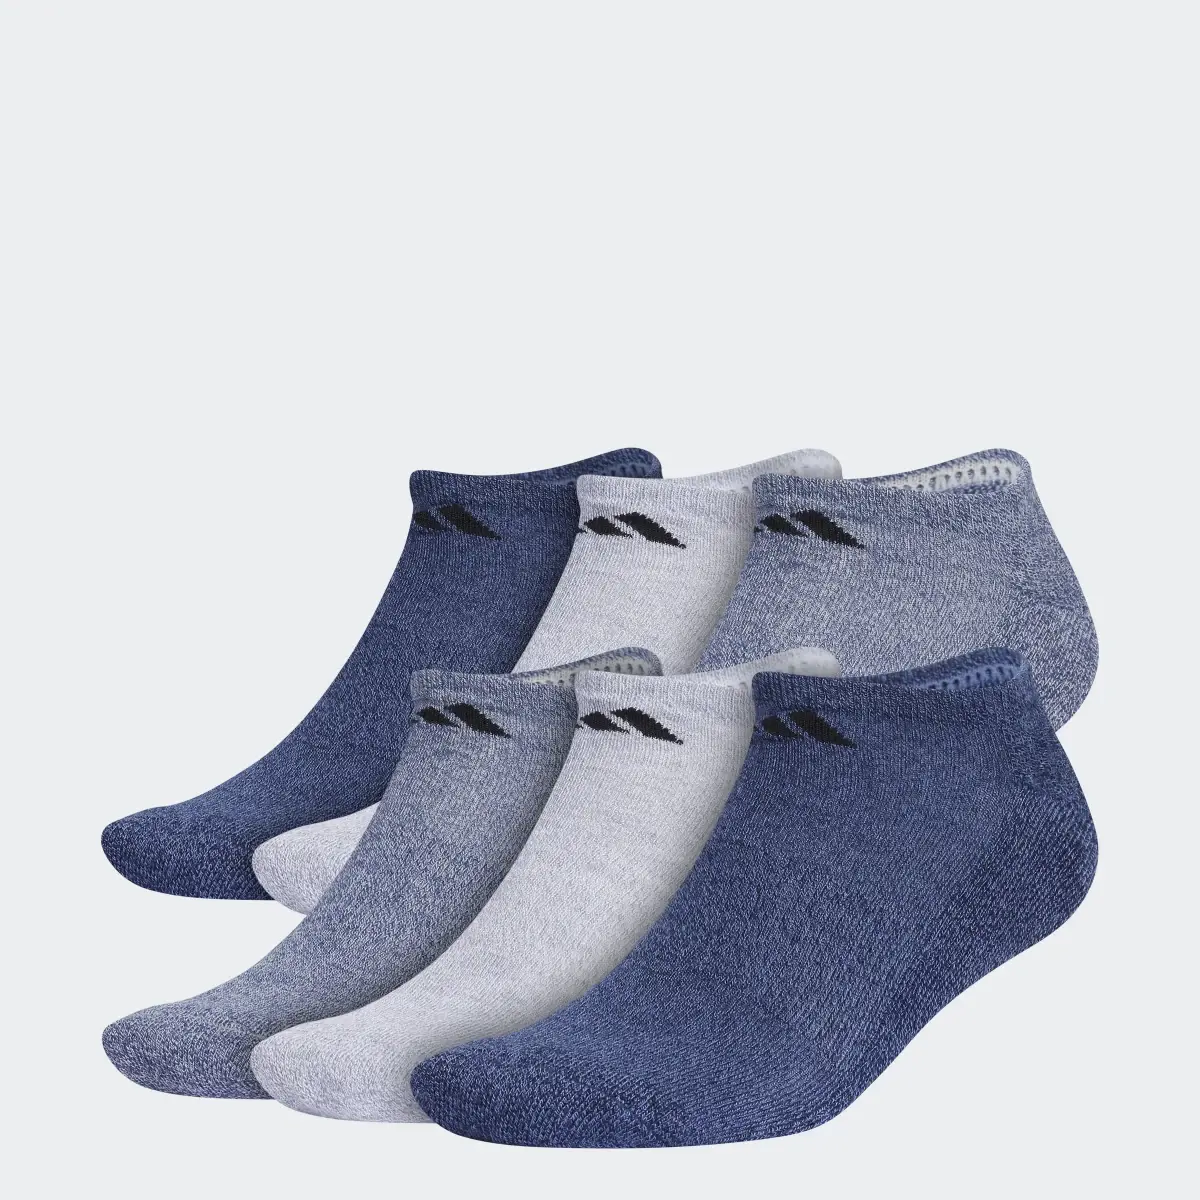 Adidas Athletic Cushioned No-Show Socks 6 Pack. 1